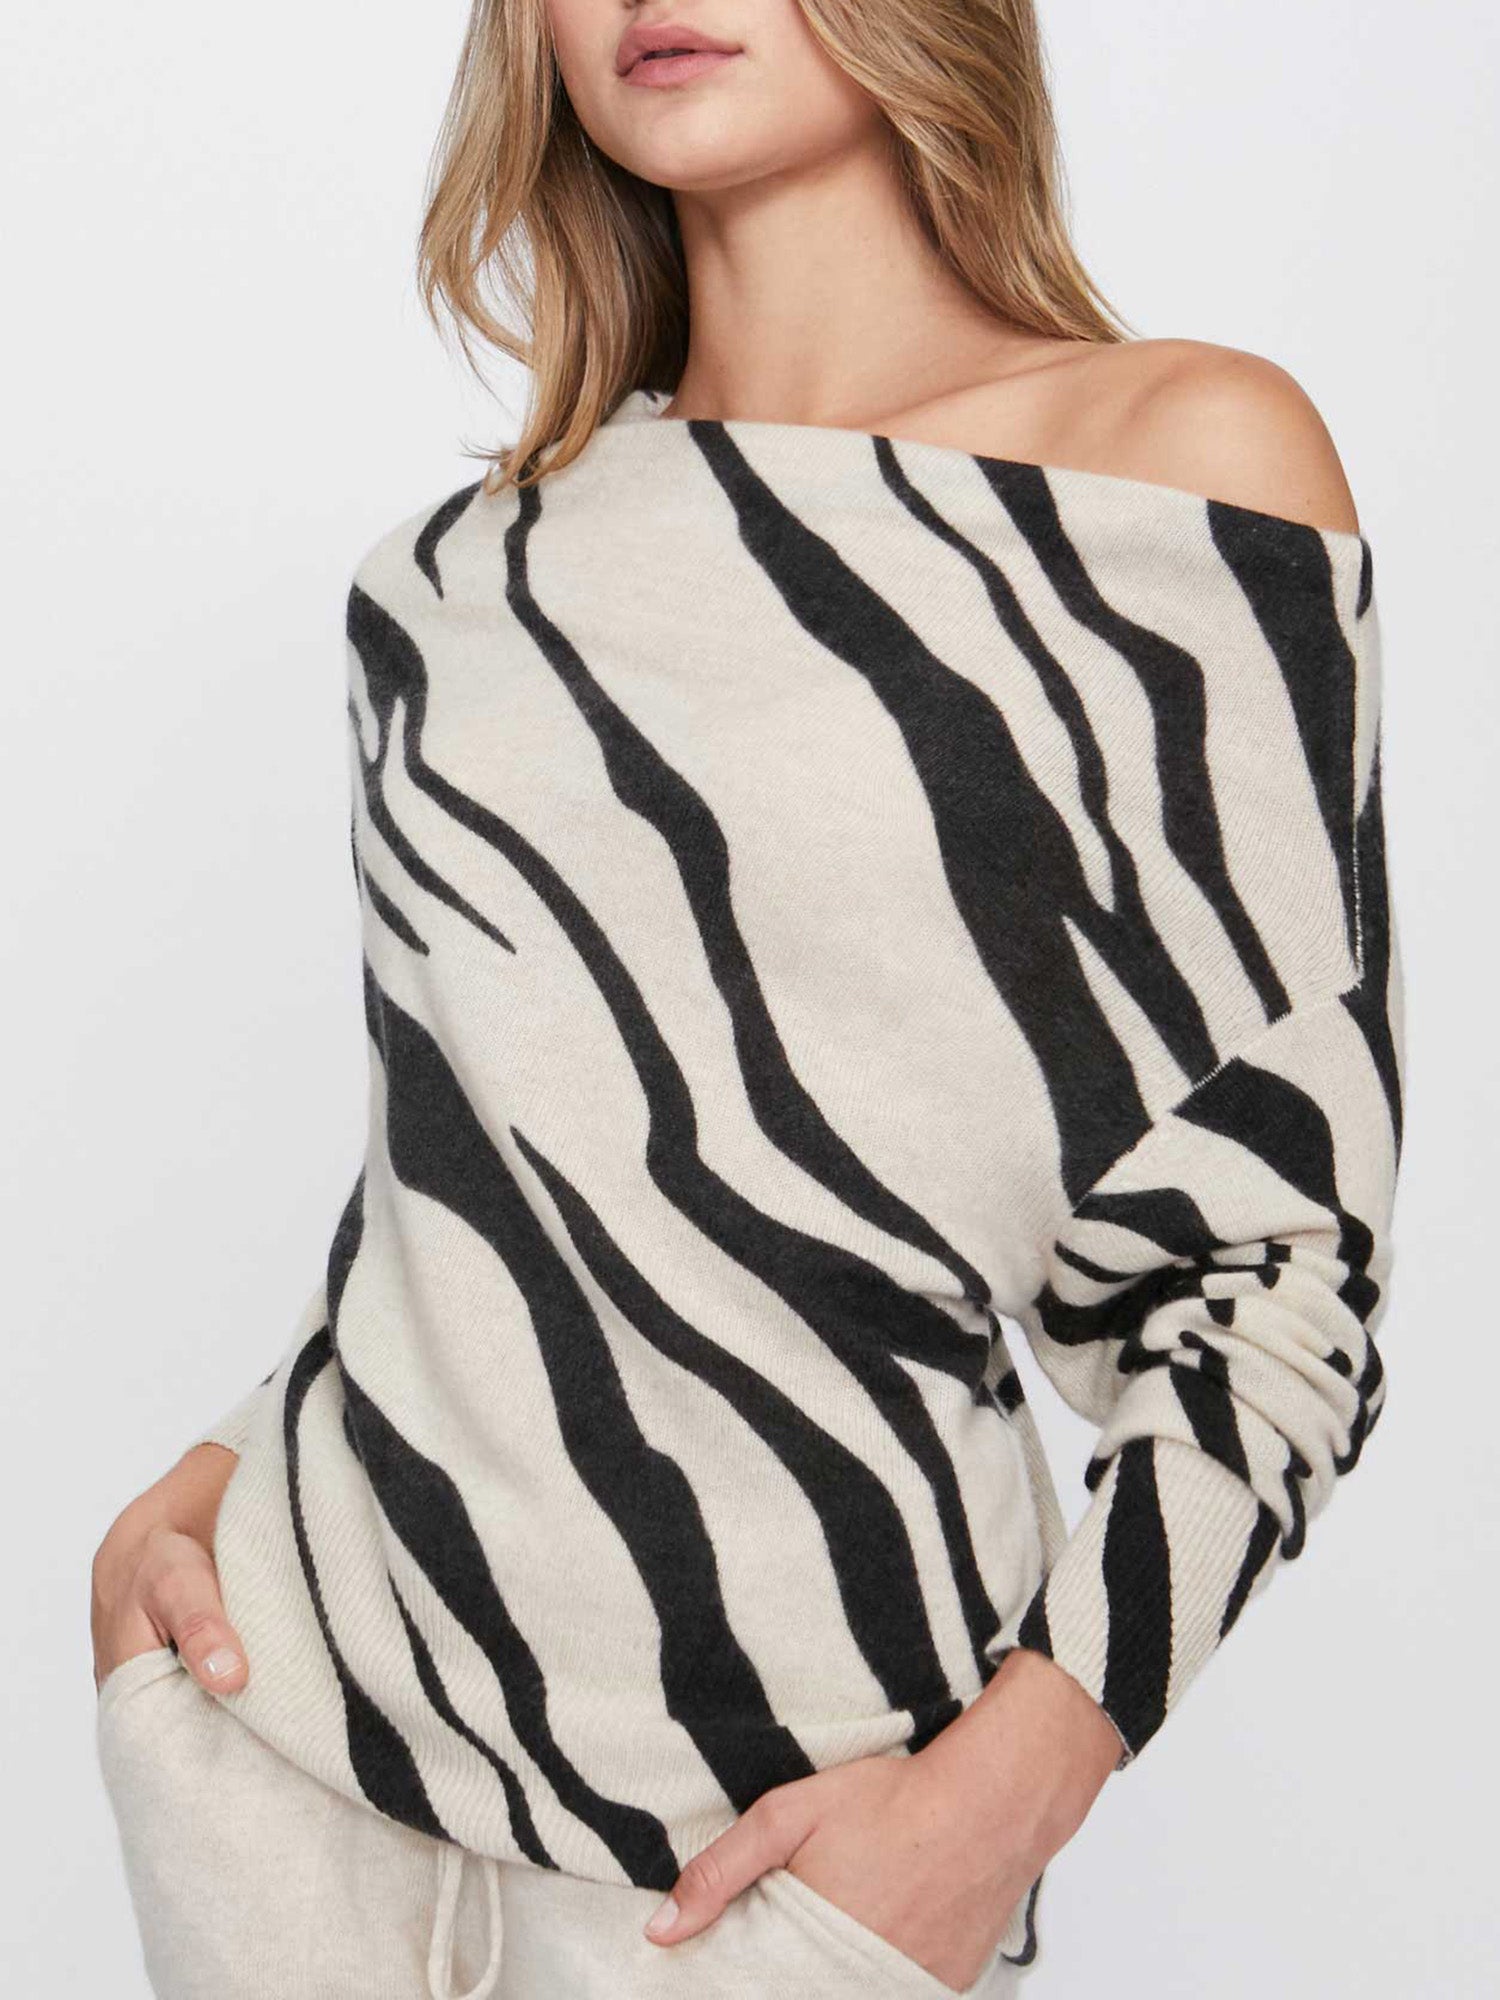 Lori cashmere off shoulder zebra print sweater front view 2